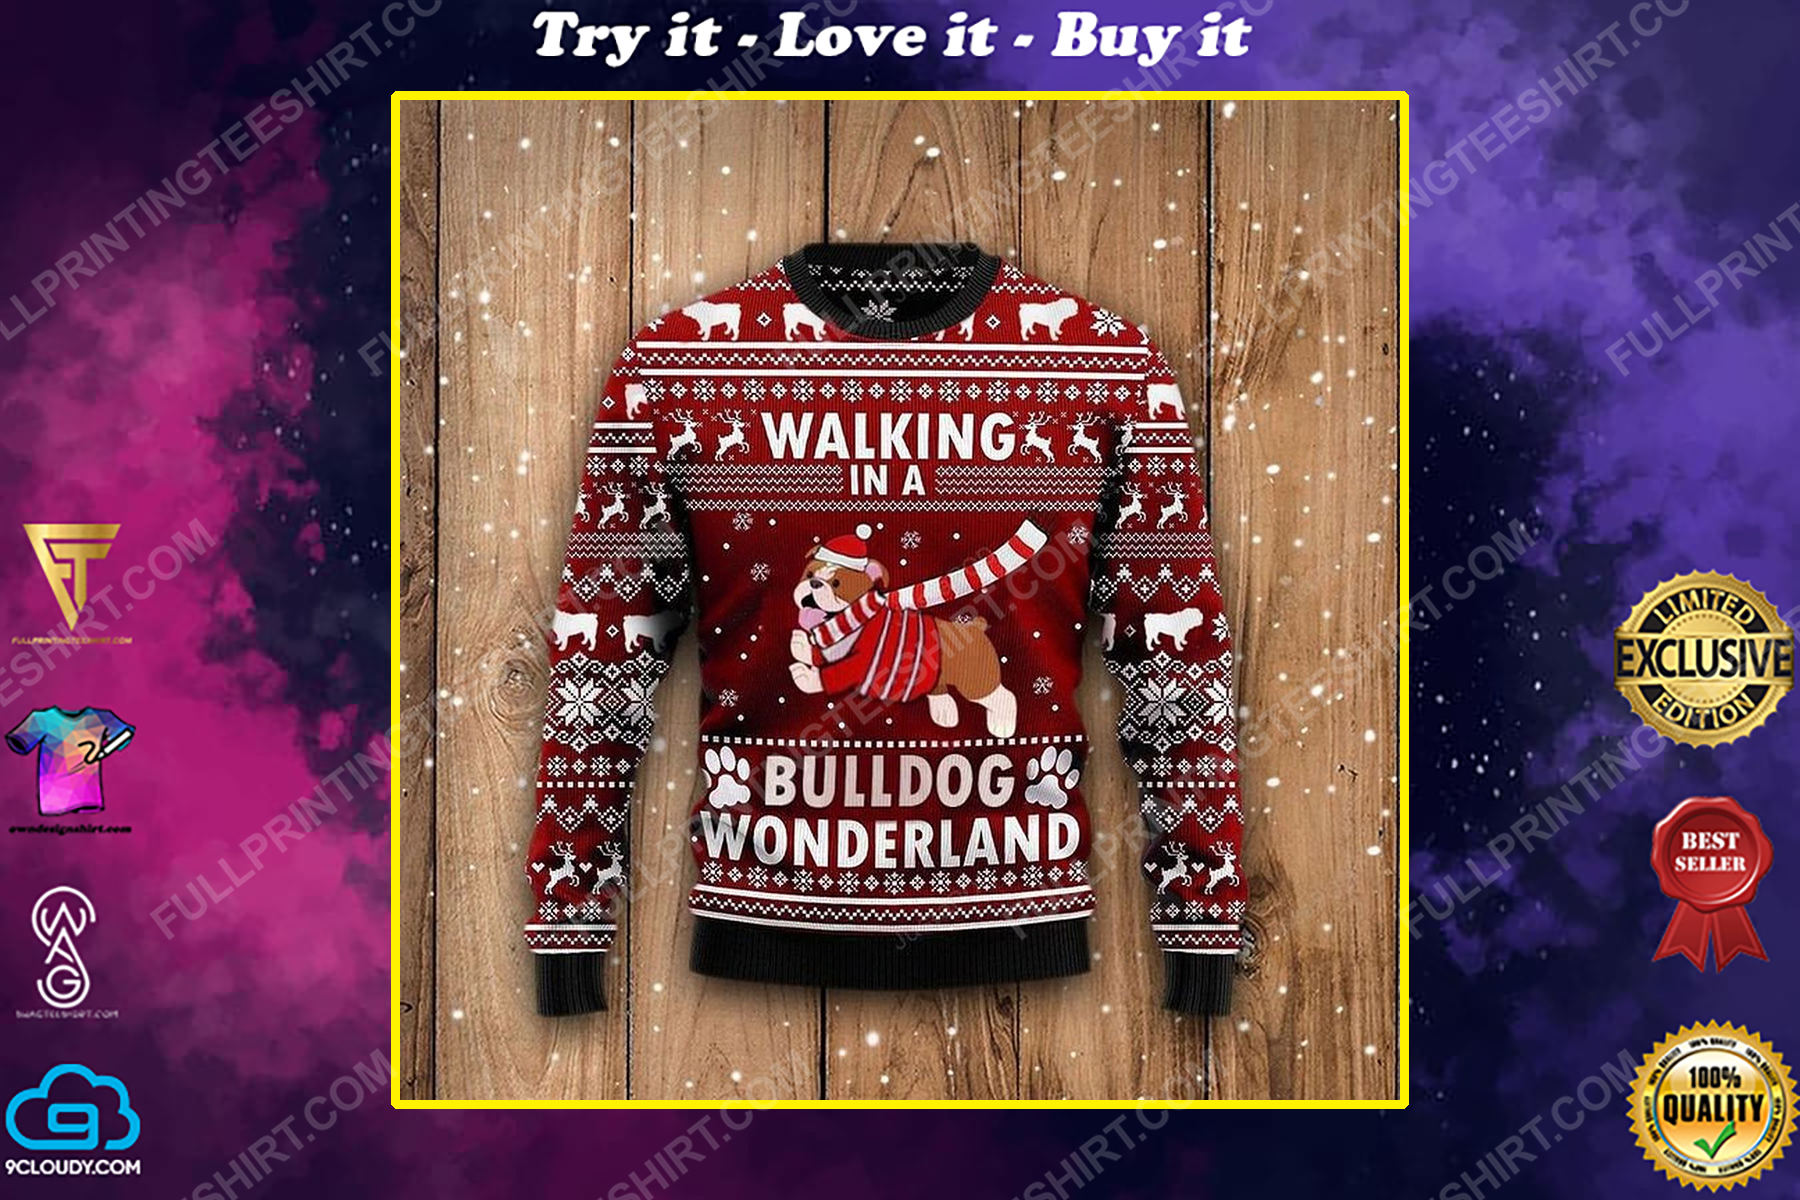 Walking in a bulldog wonderland full print ugly christmas sweater